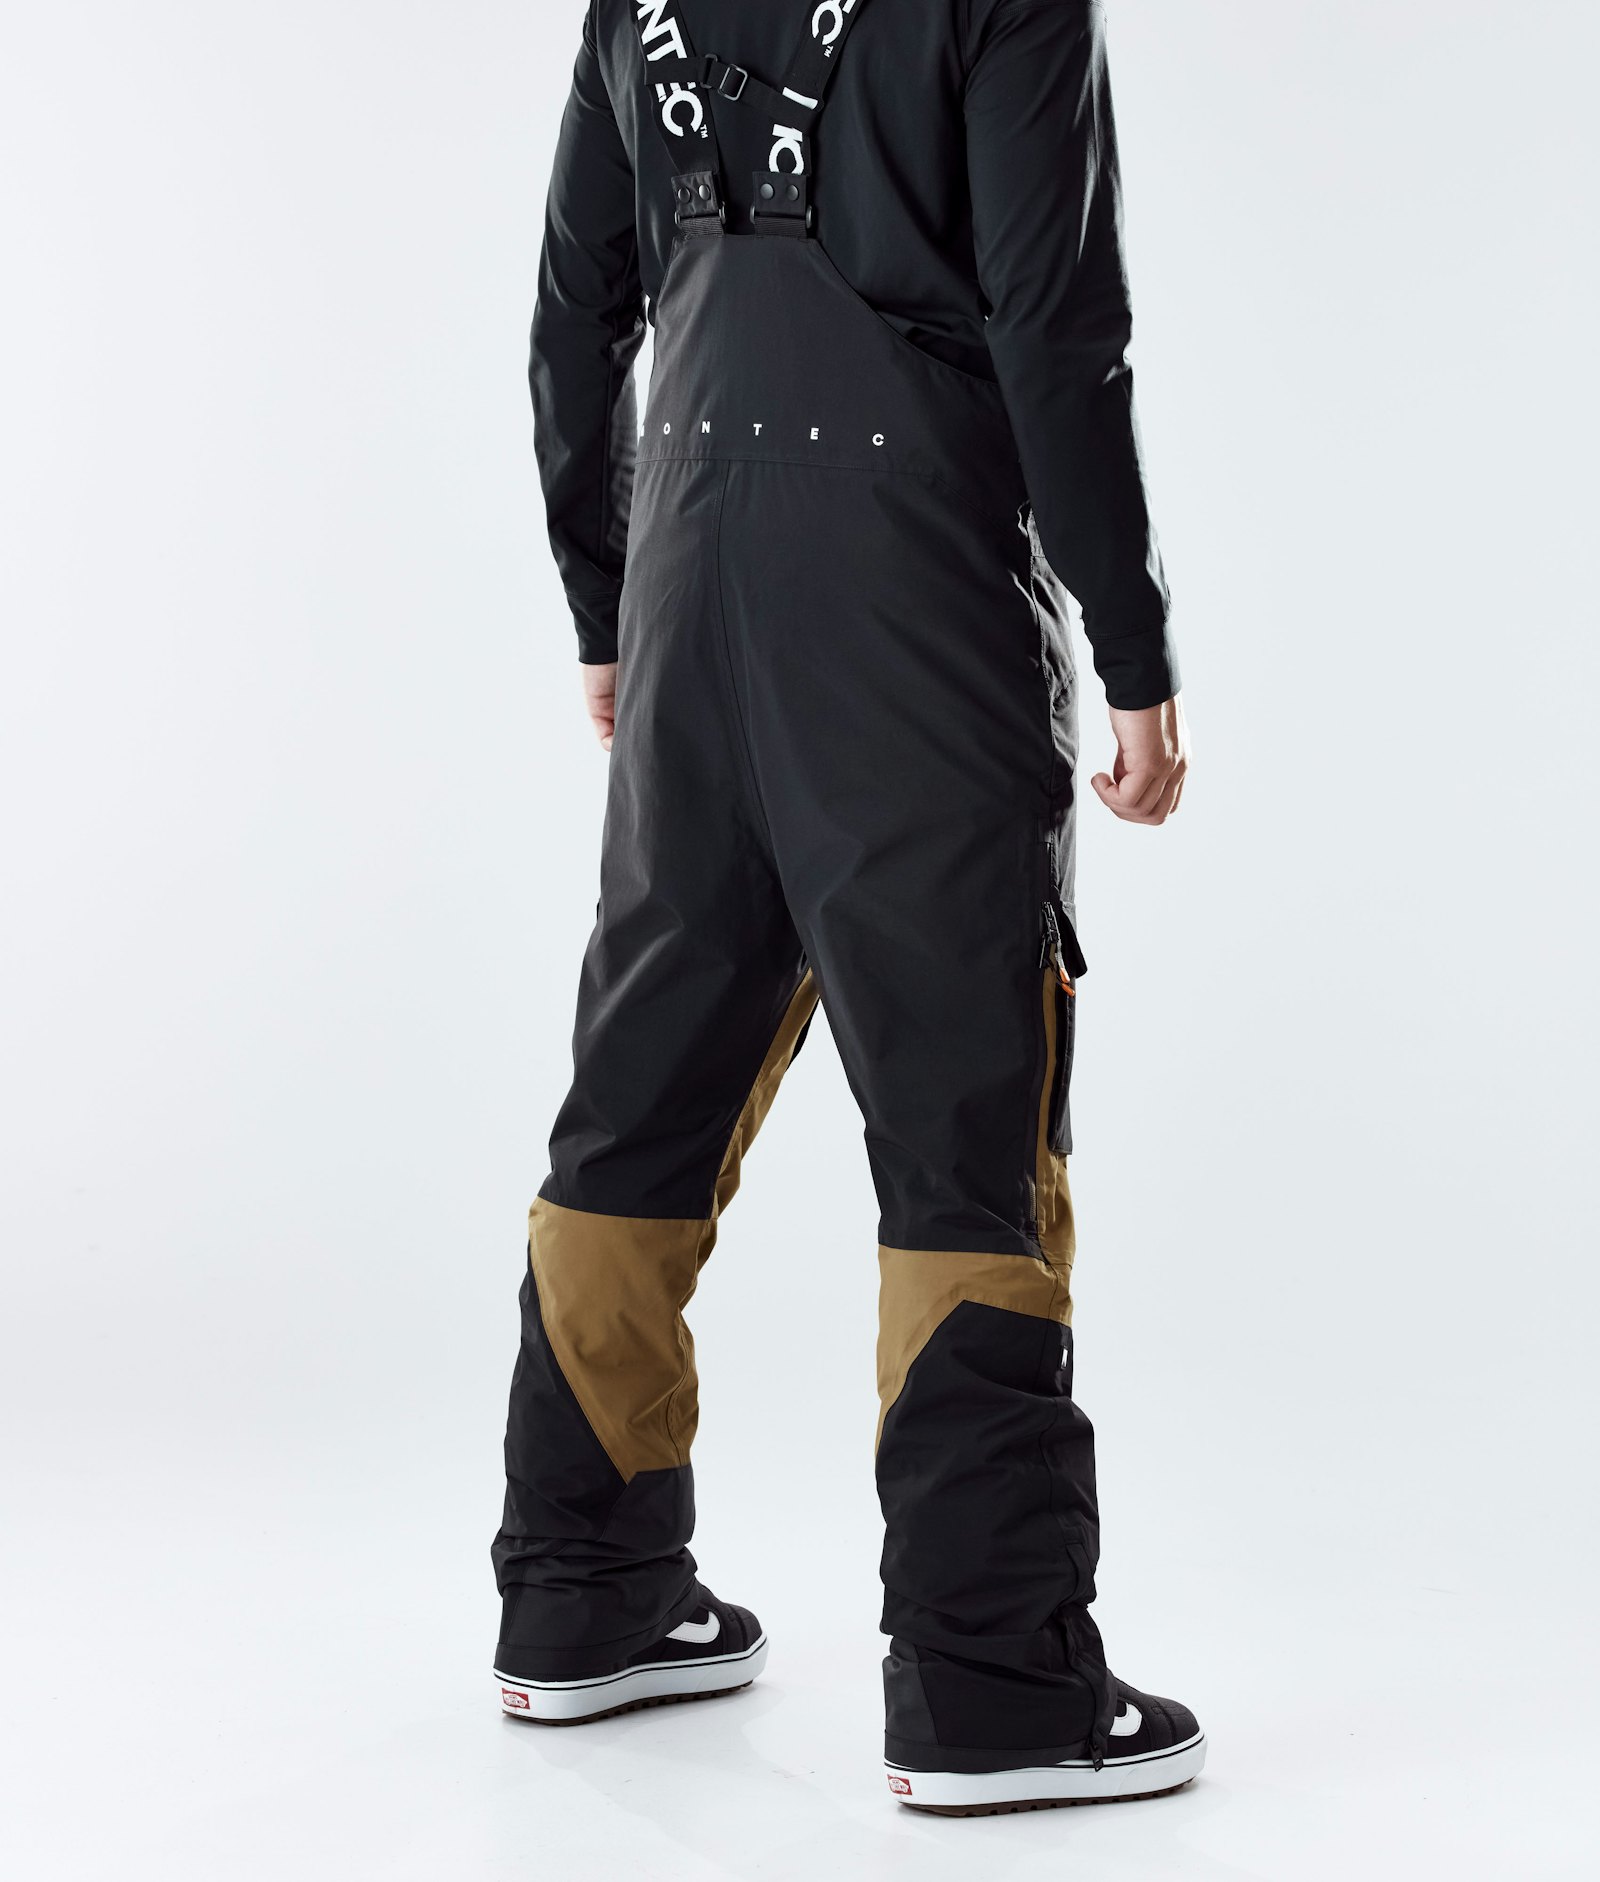 Fawk 2020 Snowboard Pants Men Black/Gold